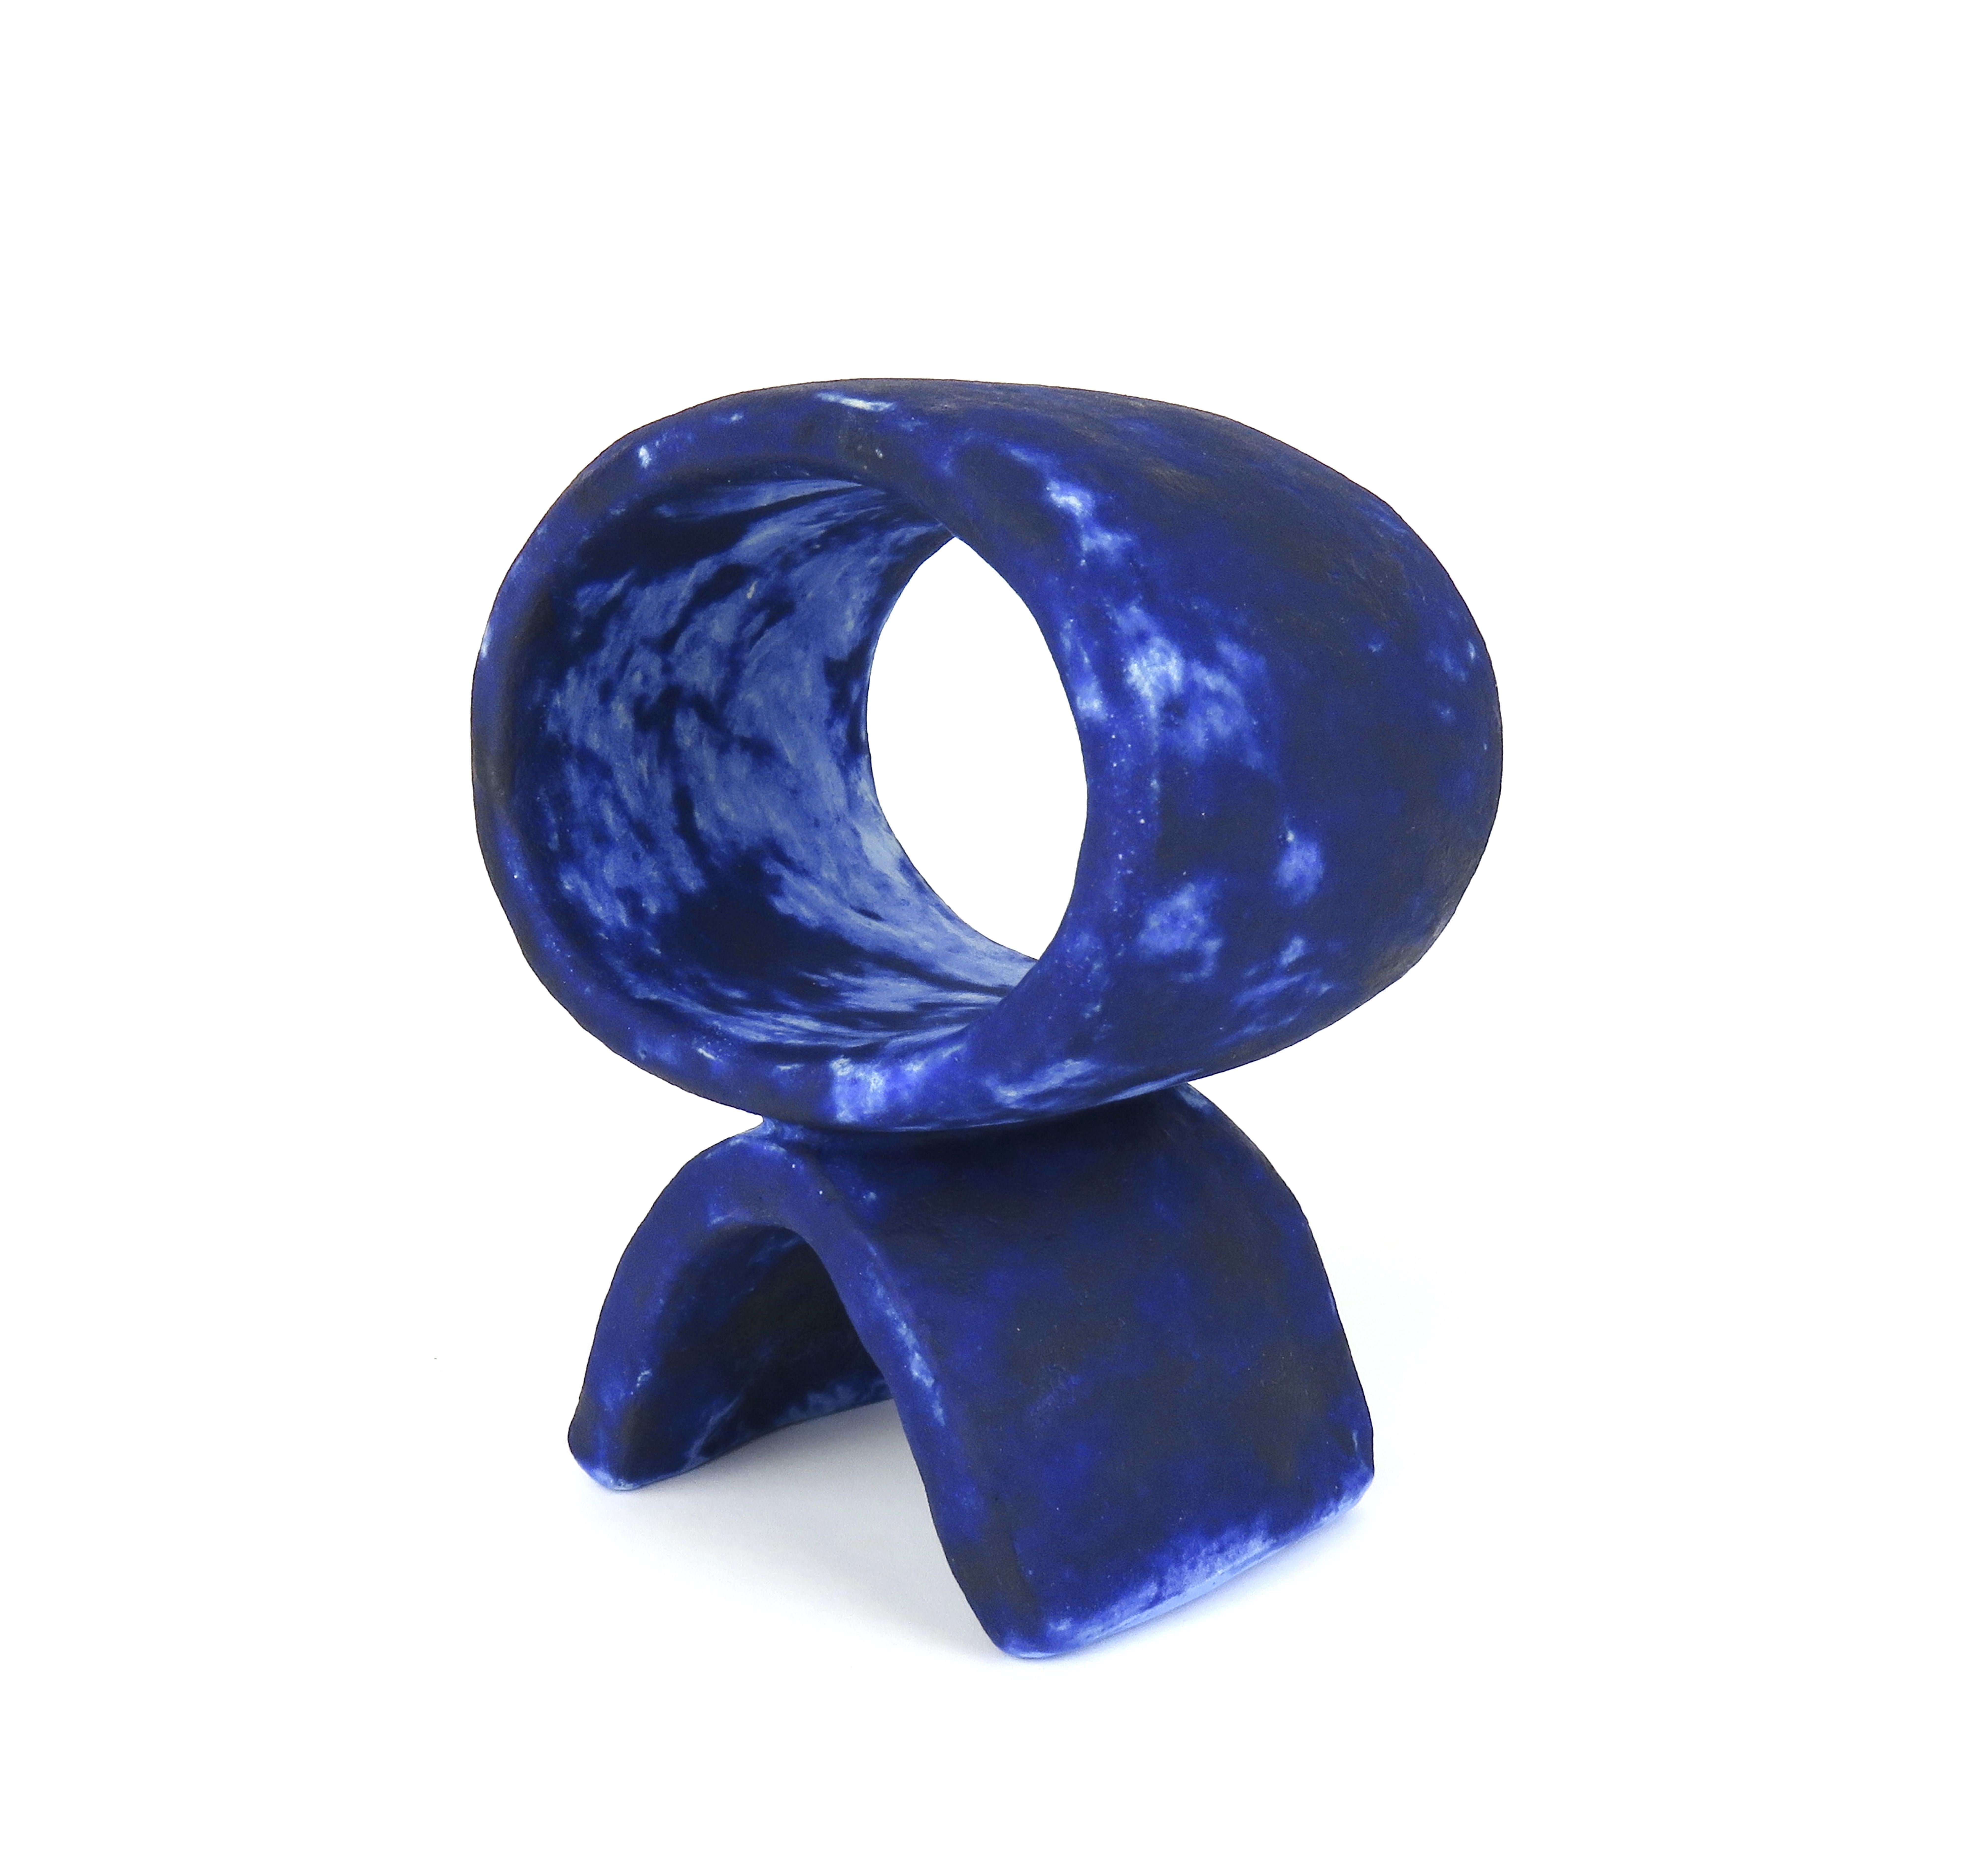 Mottled Deep Blue Hand Built Ceramic Totem, Wide Oval on Curved Foot